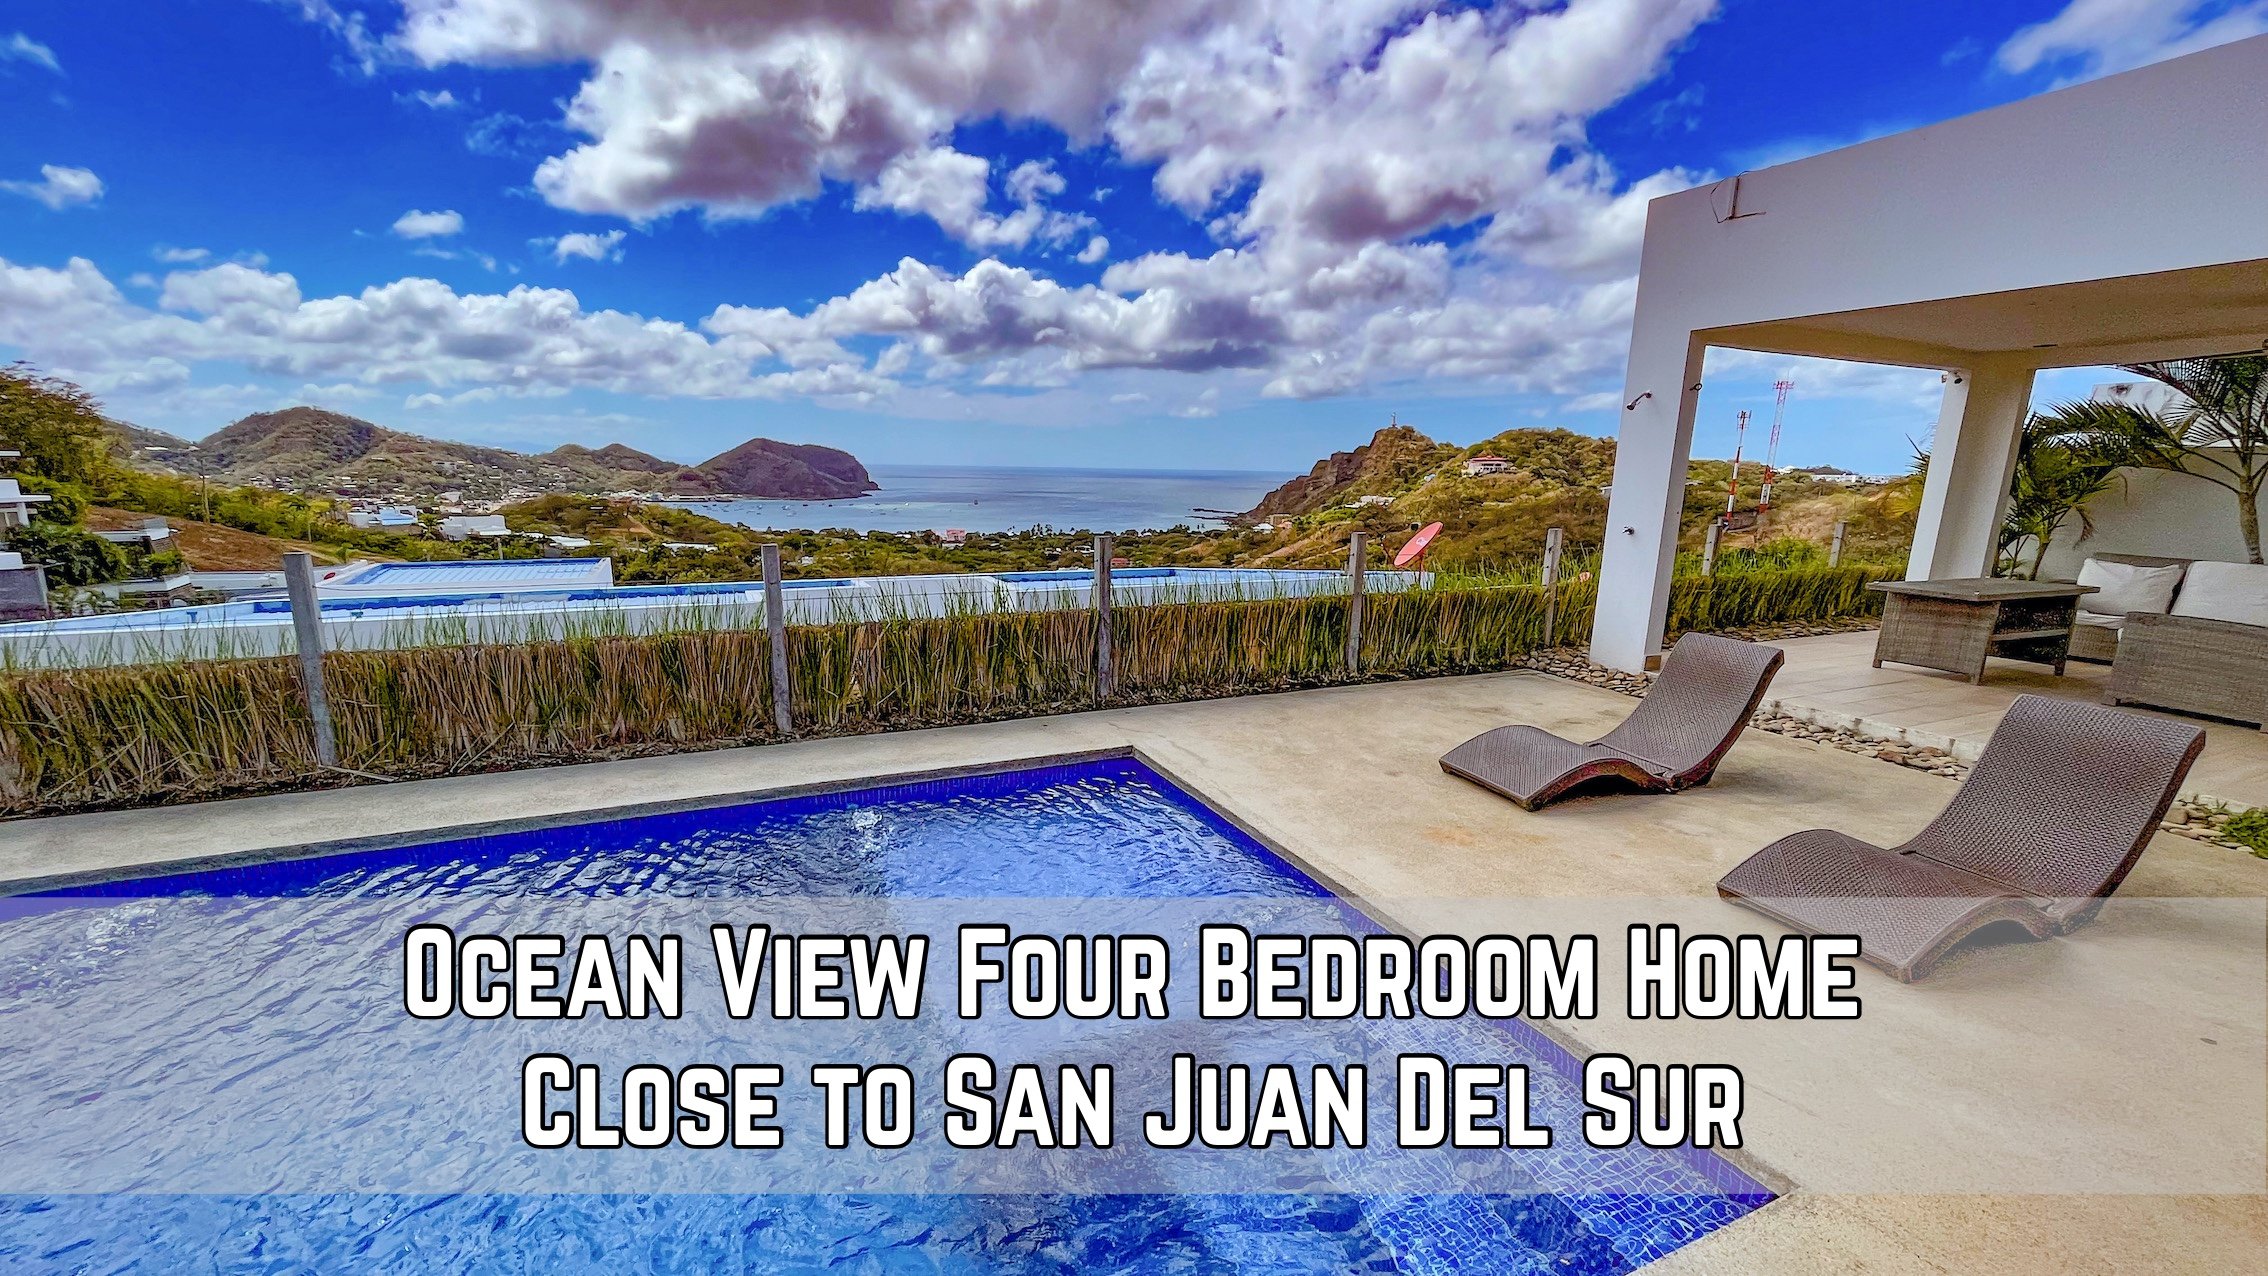 Ocean View Four Bedroom Six Bathroom Home Close to San Juan De Sur Nicaragua.jpg